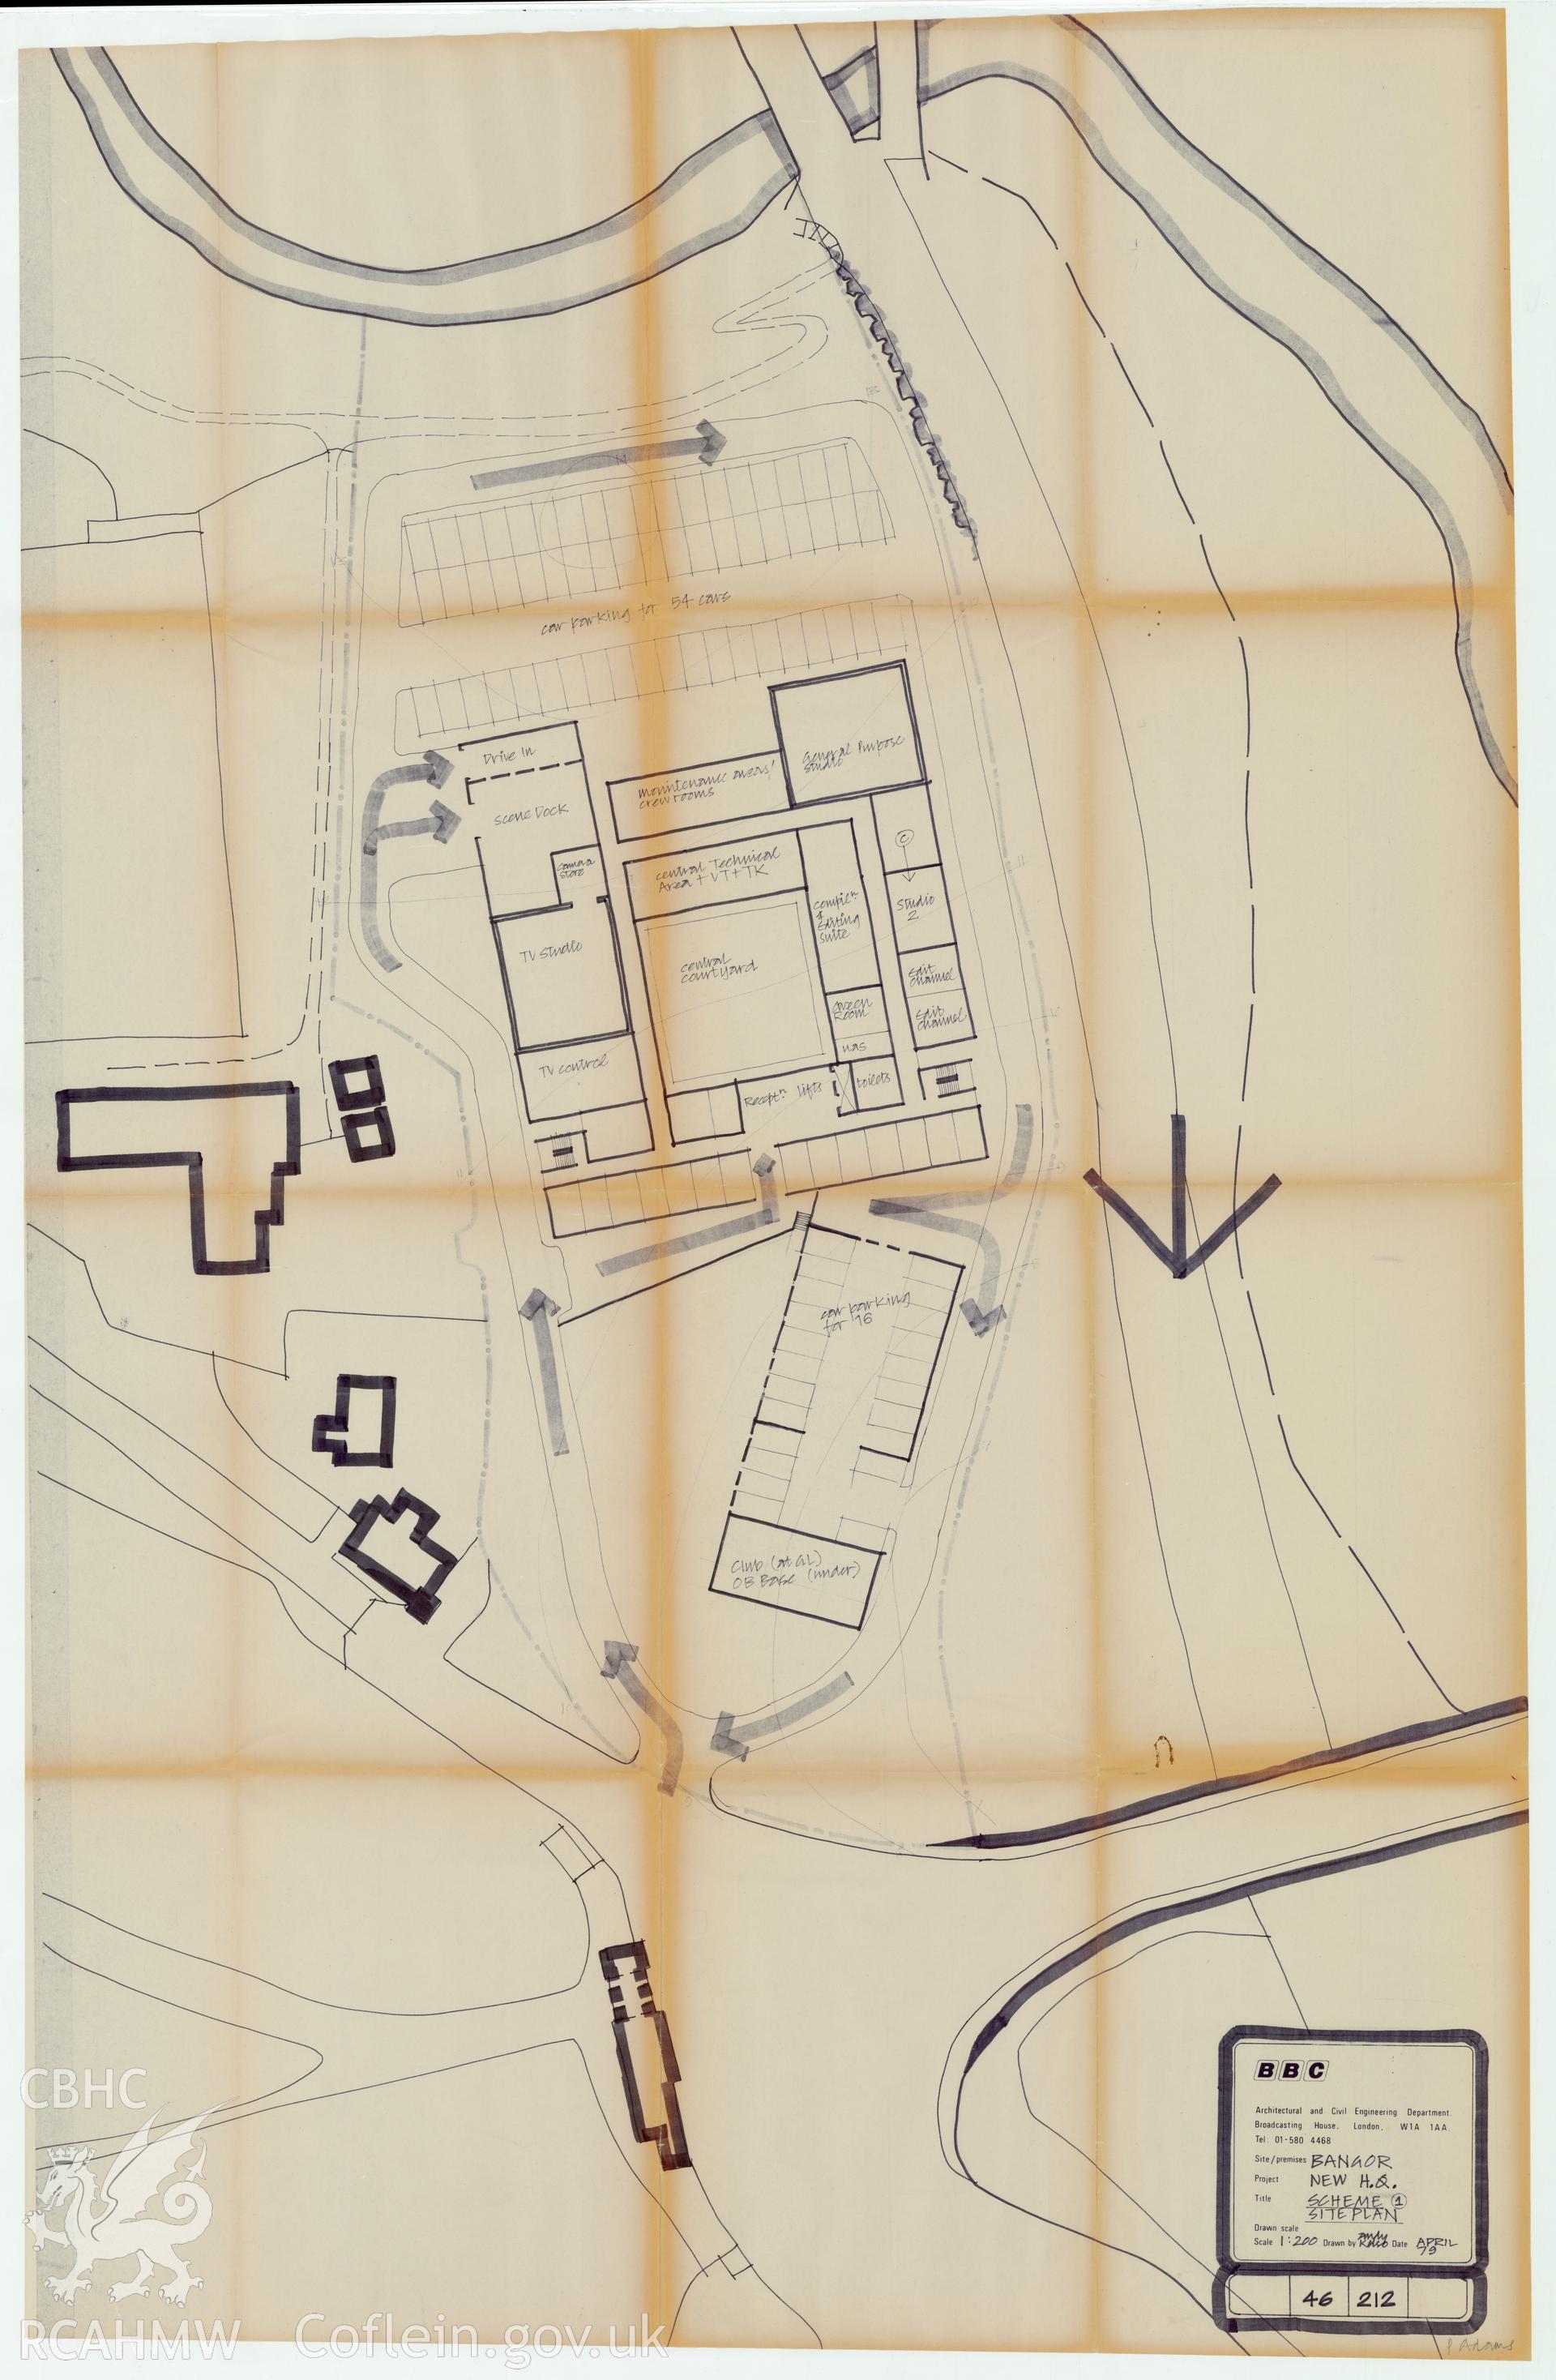 BBC premises, Bangor - New HQ Development Scheme 1 - block plan. Drawing No. 46/212, April 1979.